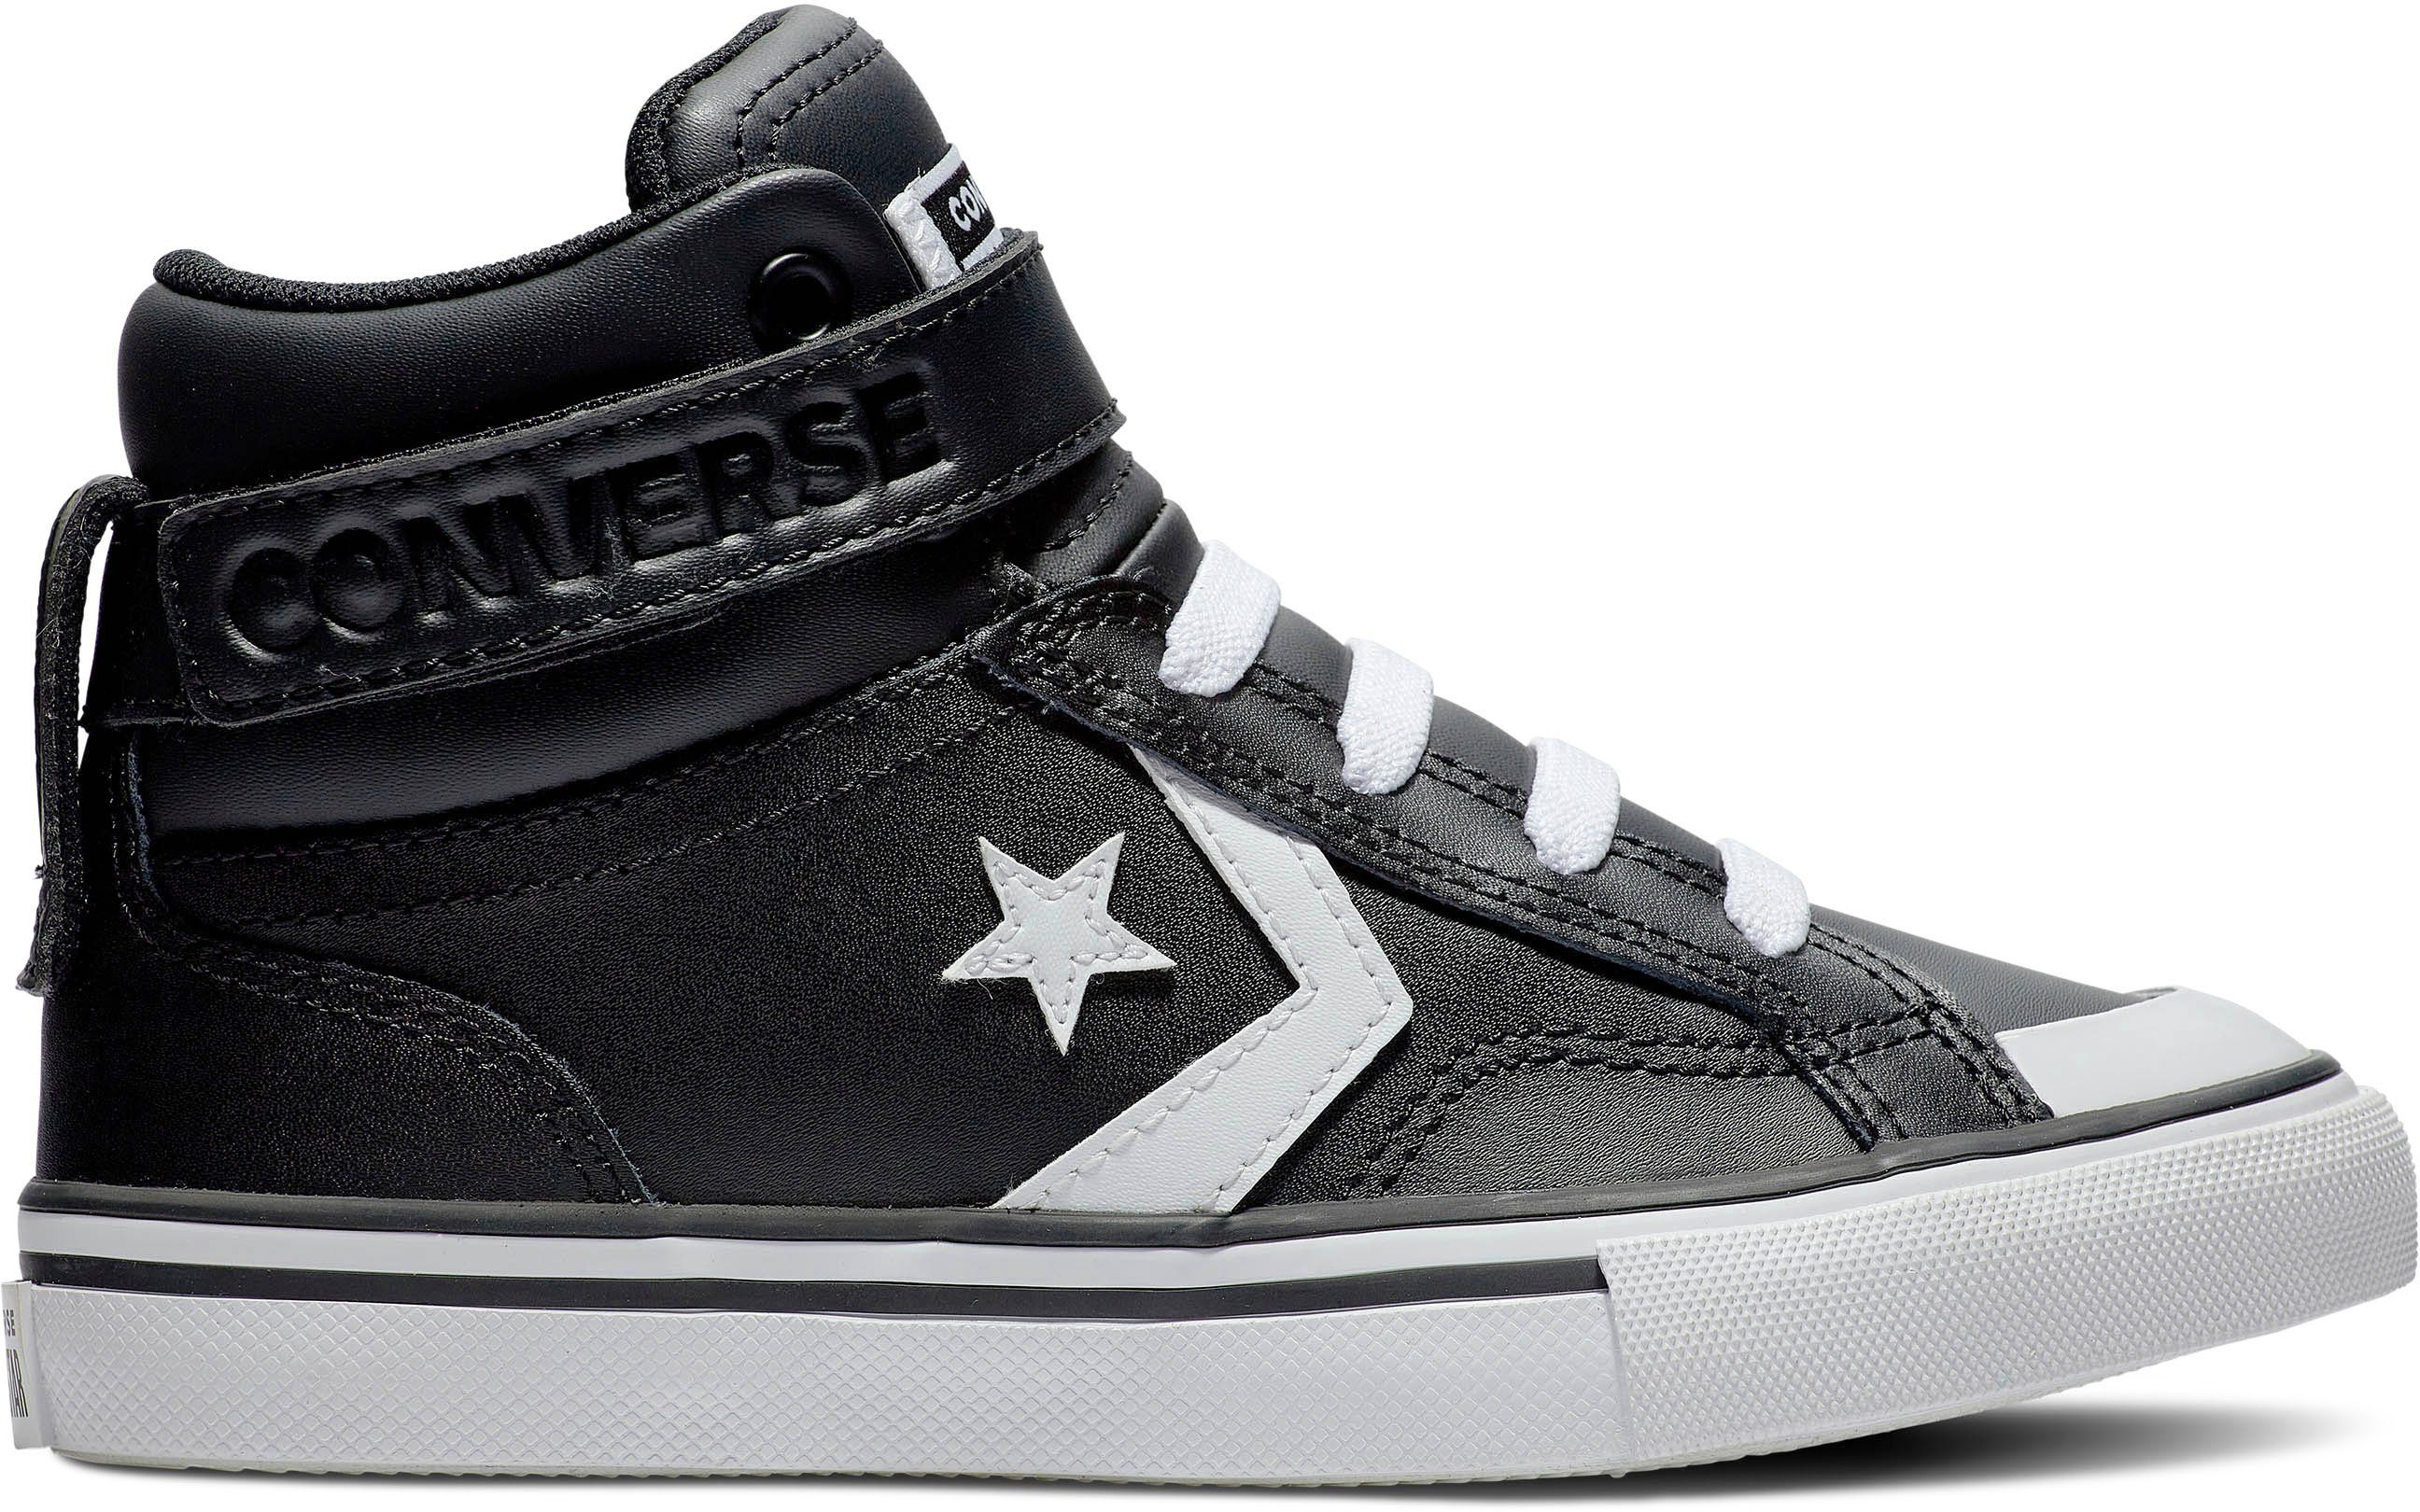 STRAP BLAZE Converse schwarz-weiß PRO LEATHER Sneaker